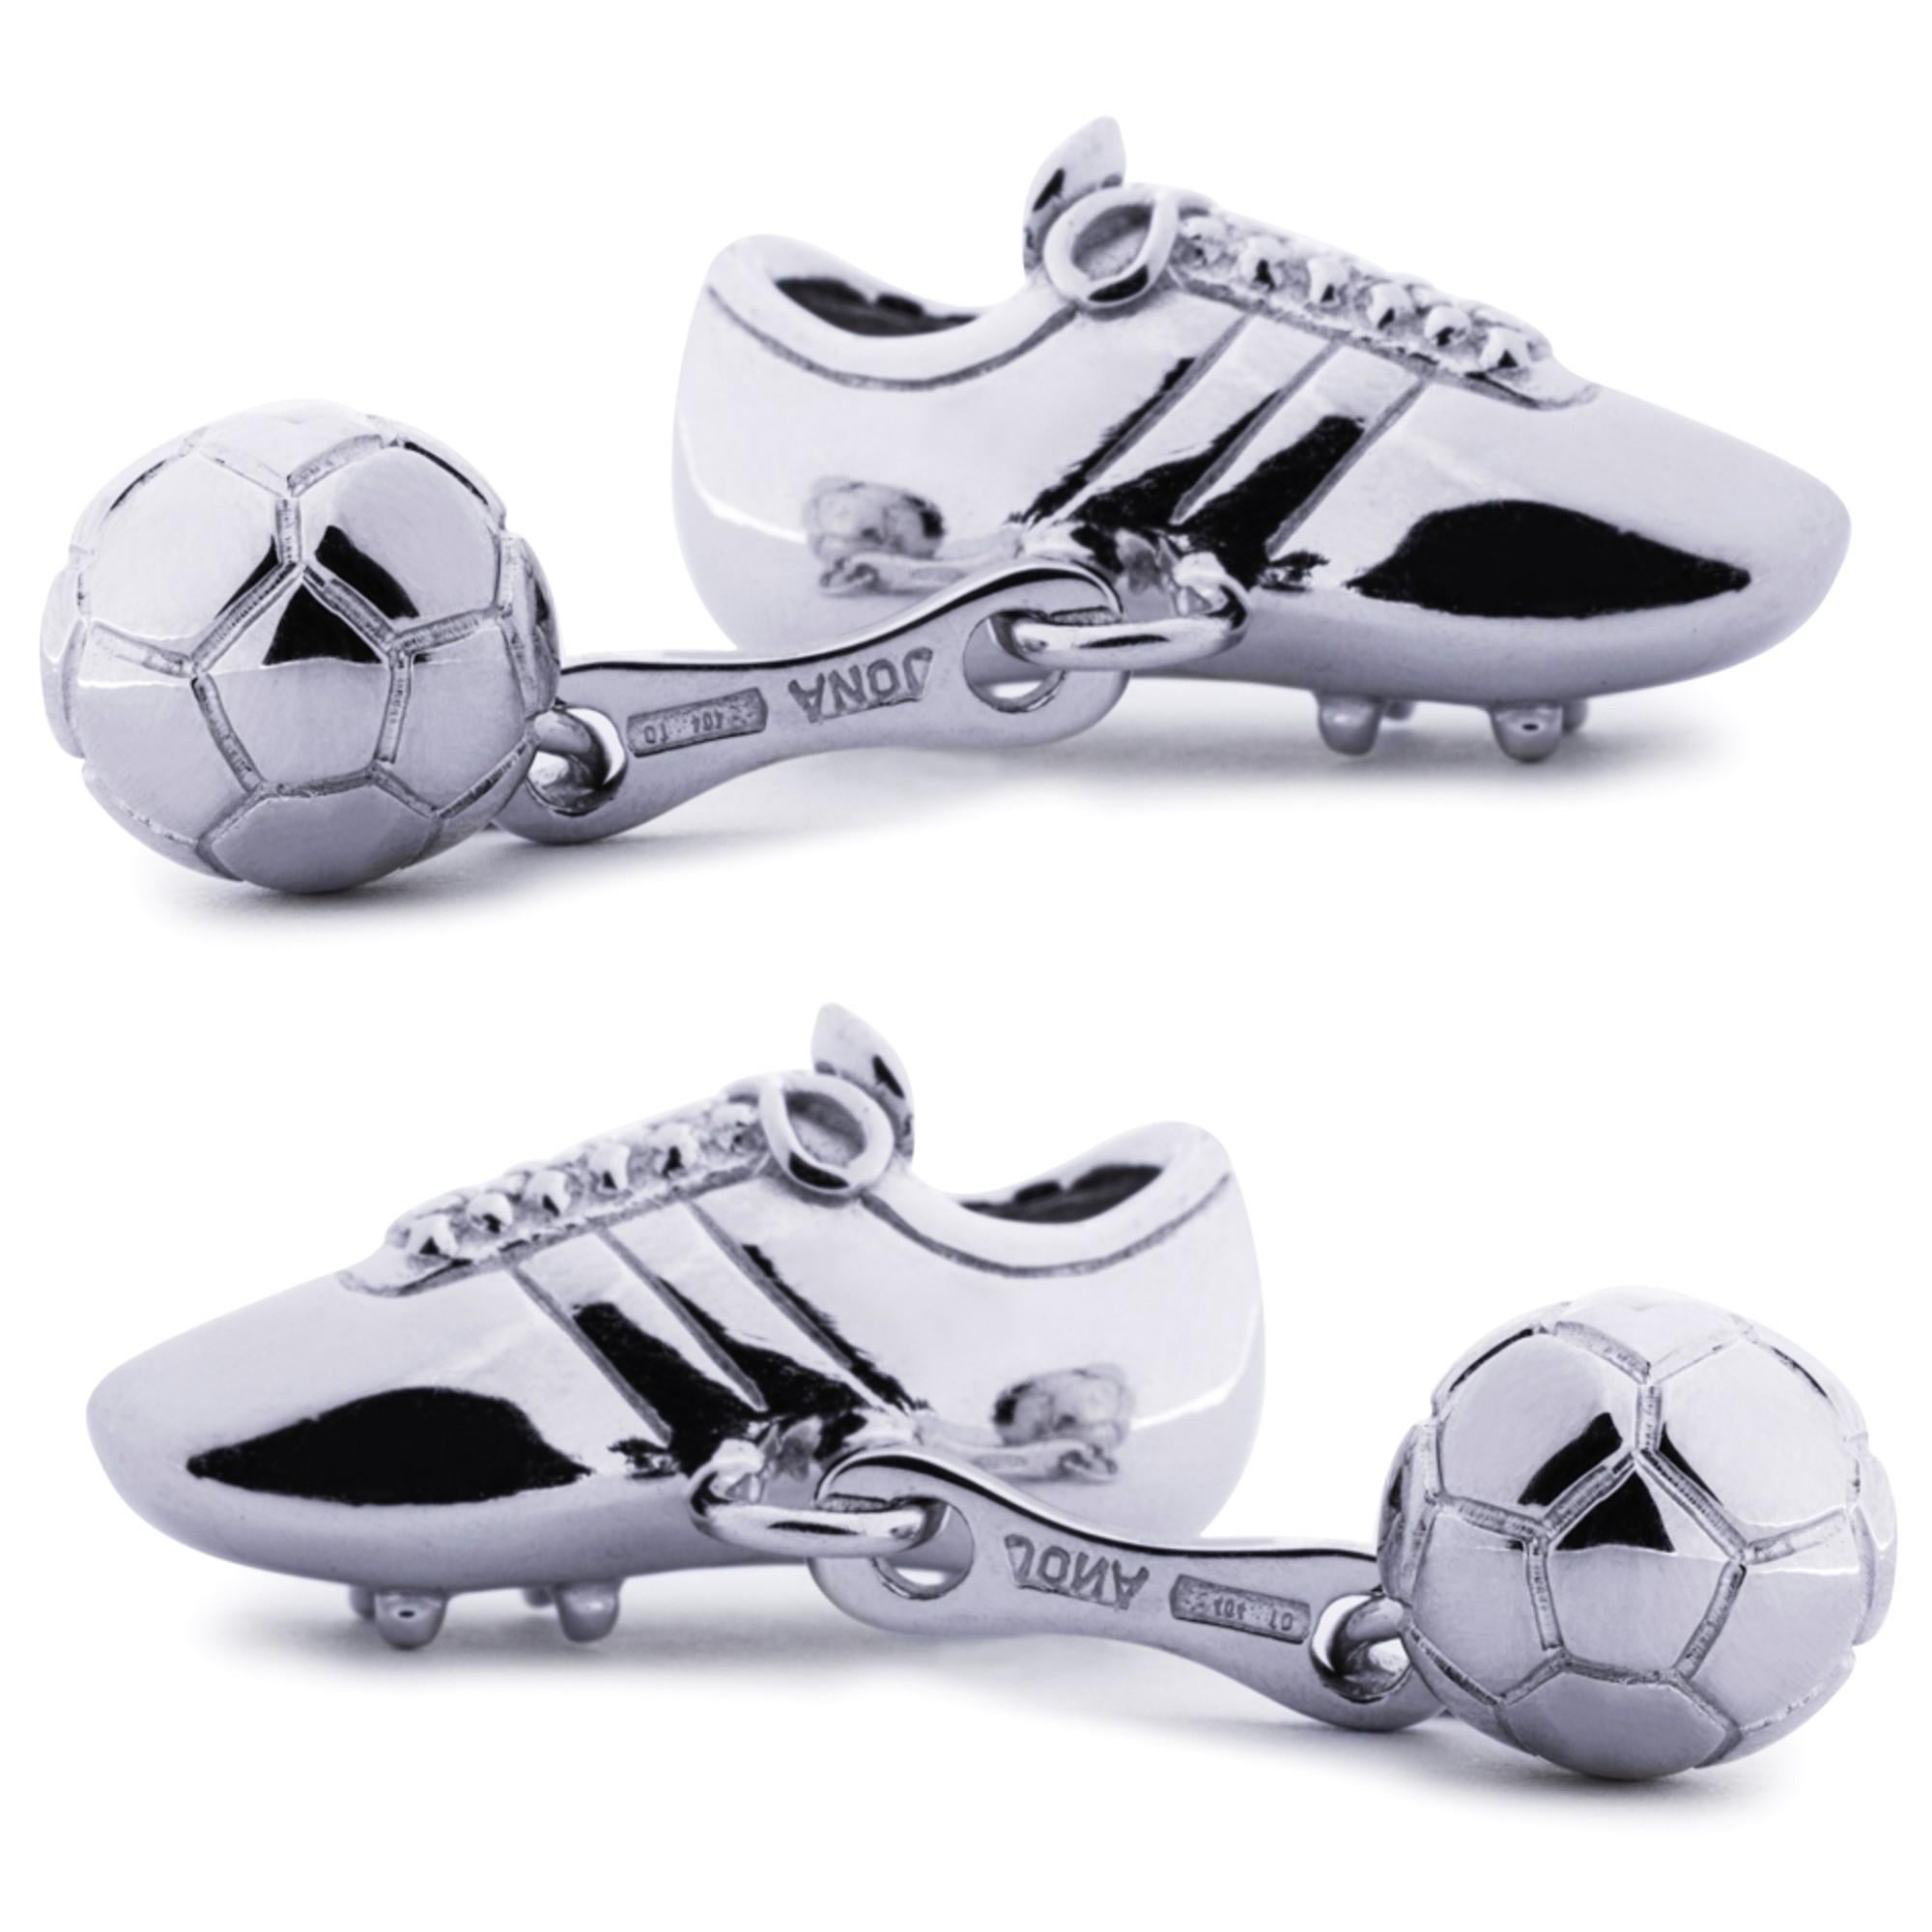 alex silver soccer